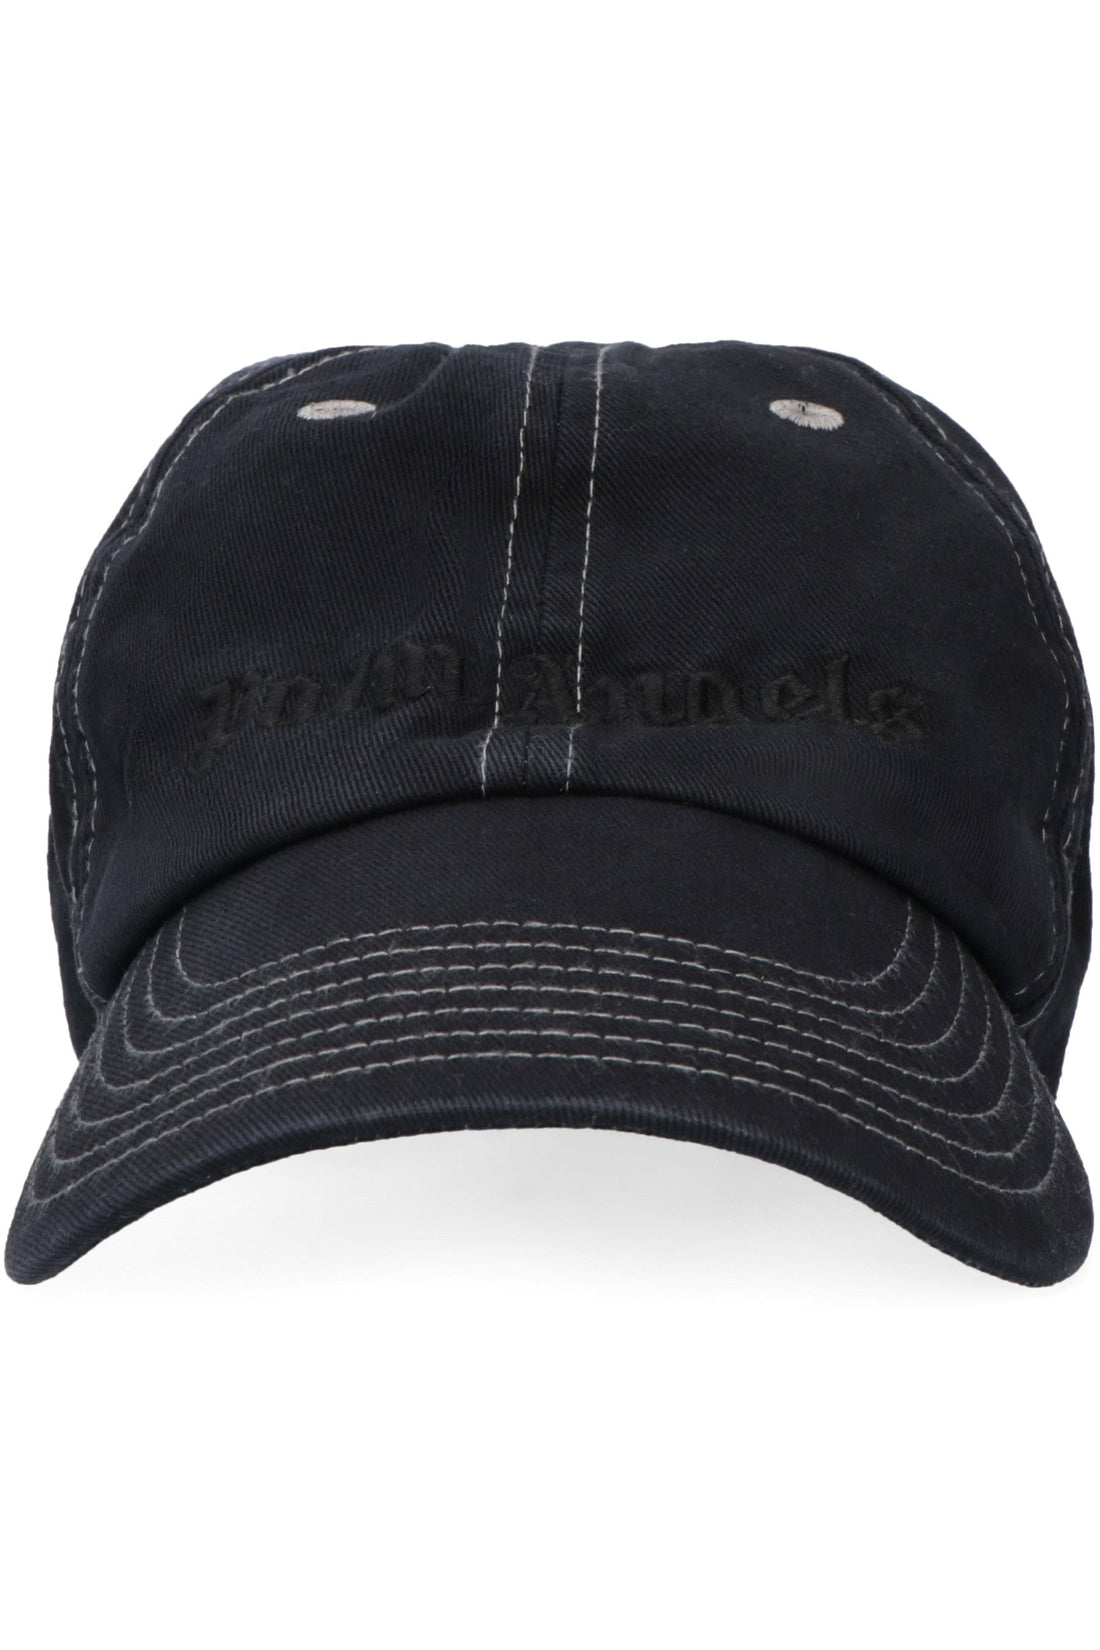 Palm Angels-OUTLET-SALE-Printed baseball cap-ARCHIVIST